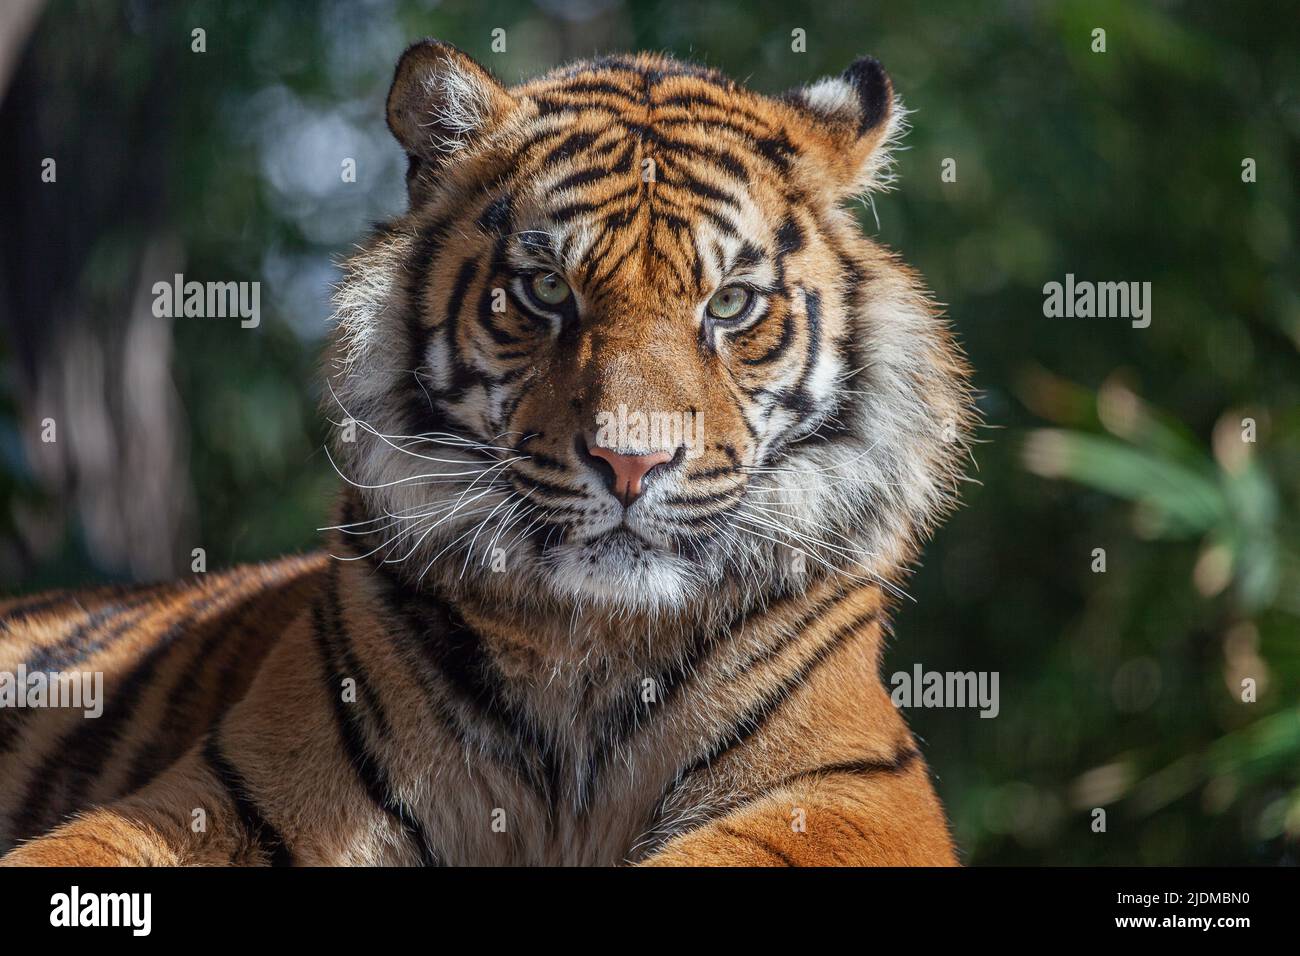 Portrait of a Sumatran Tiger (Panthera tigris sumatrae) looking at camera. Stock Photo